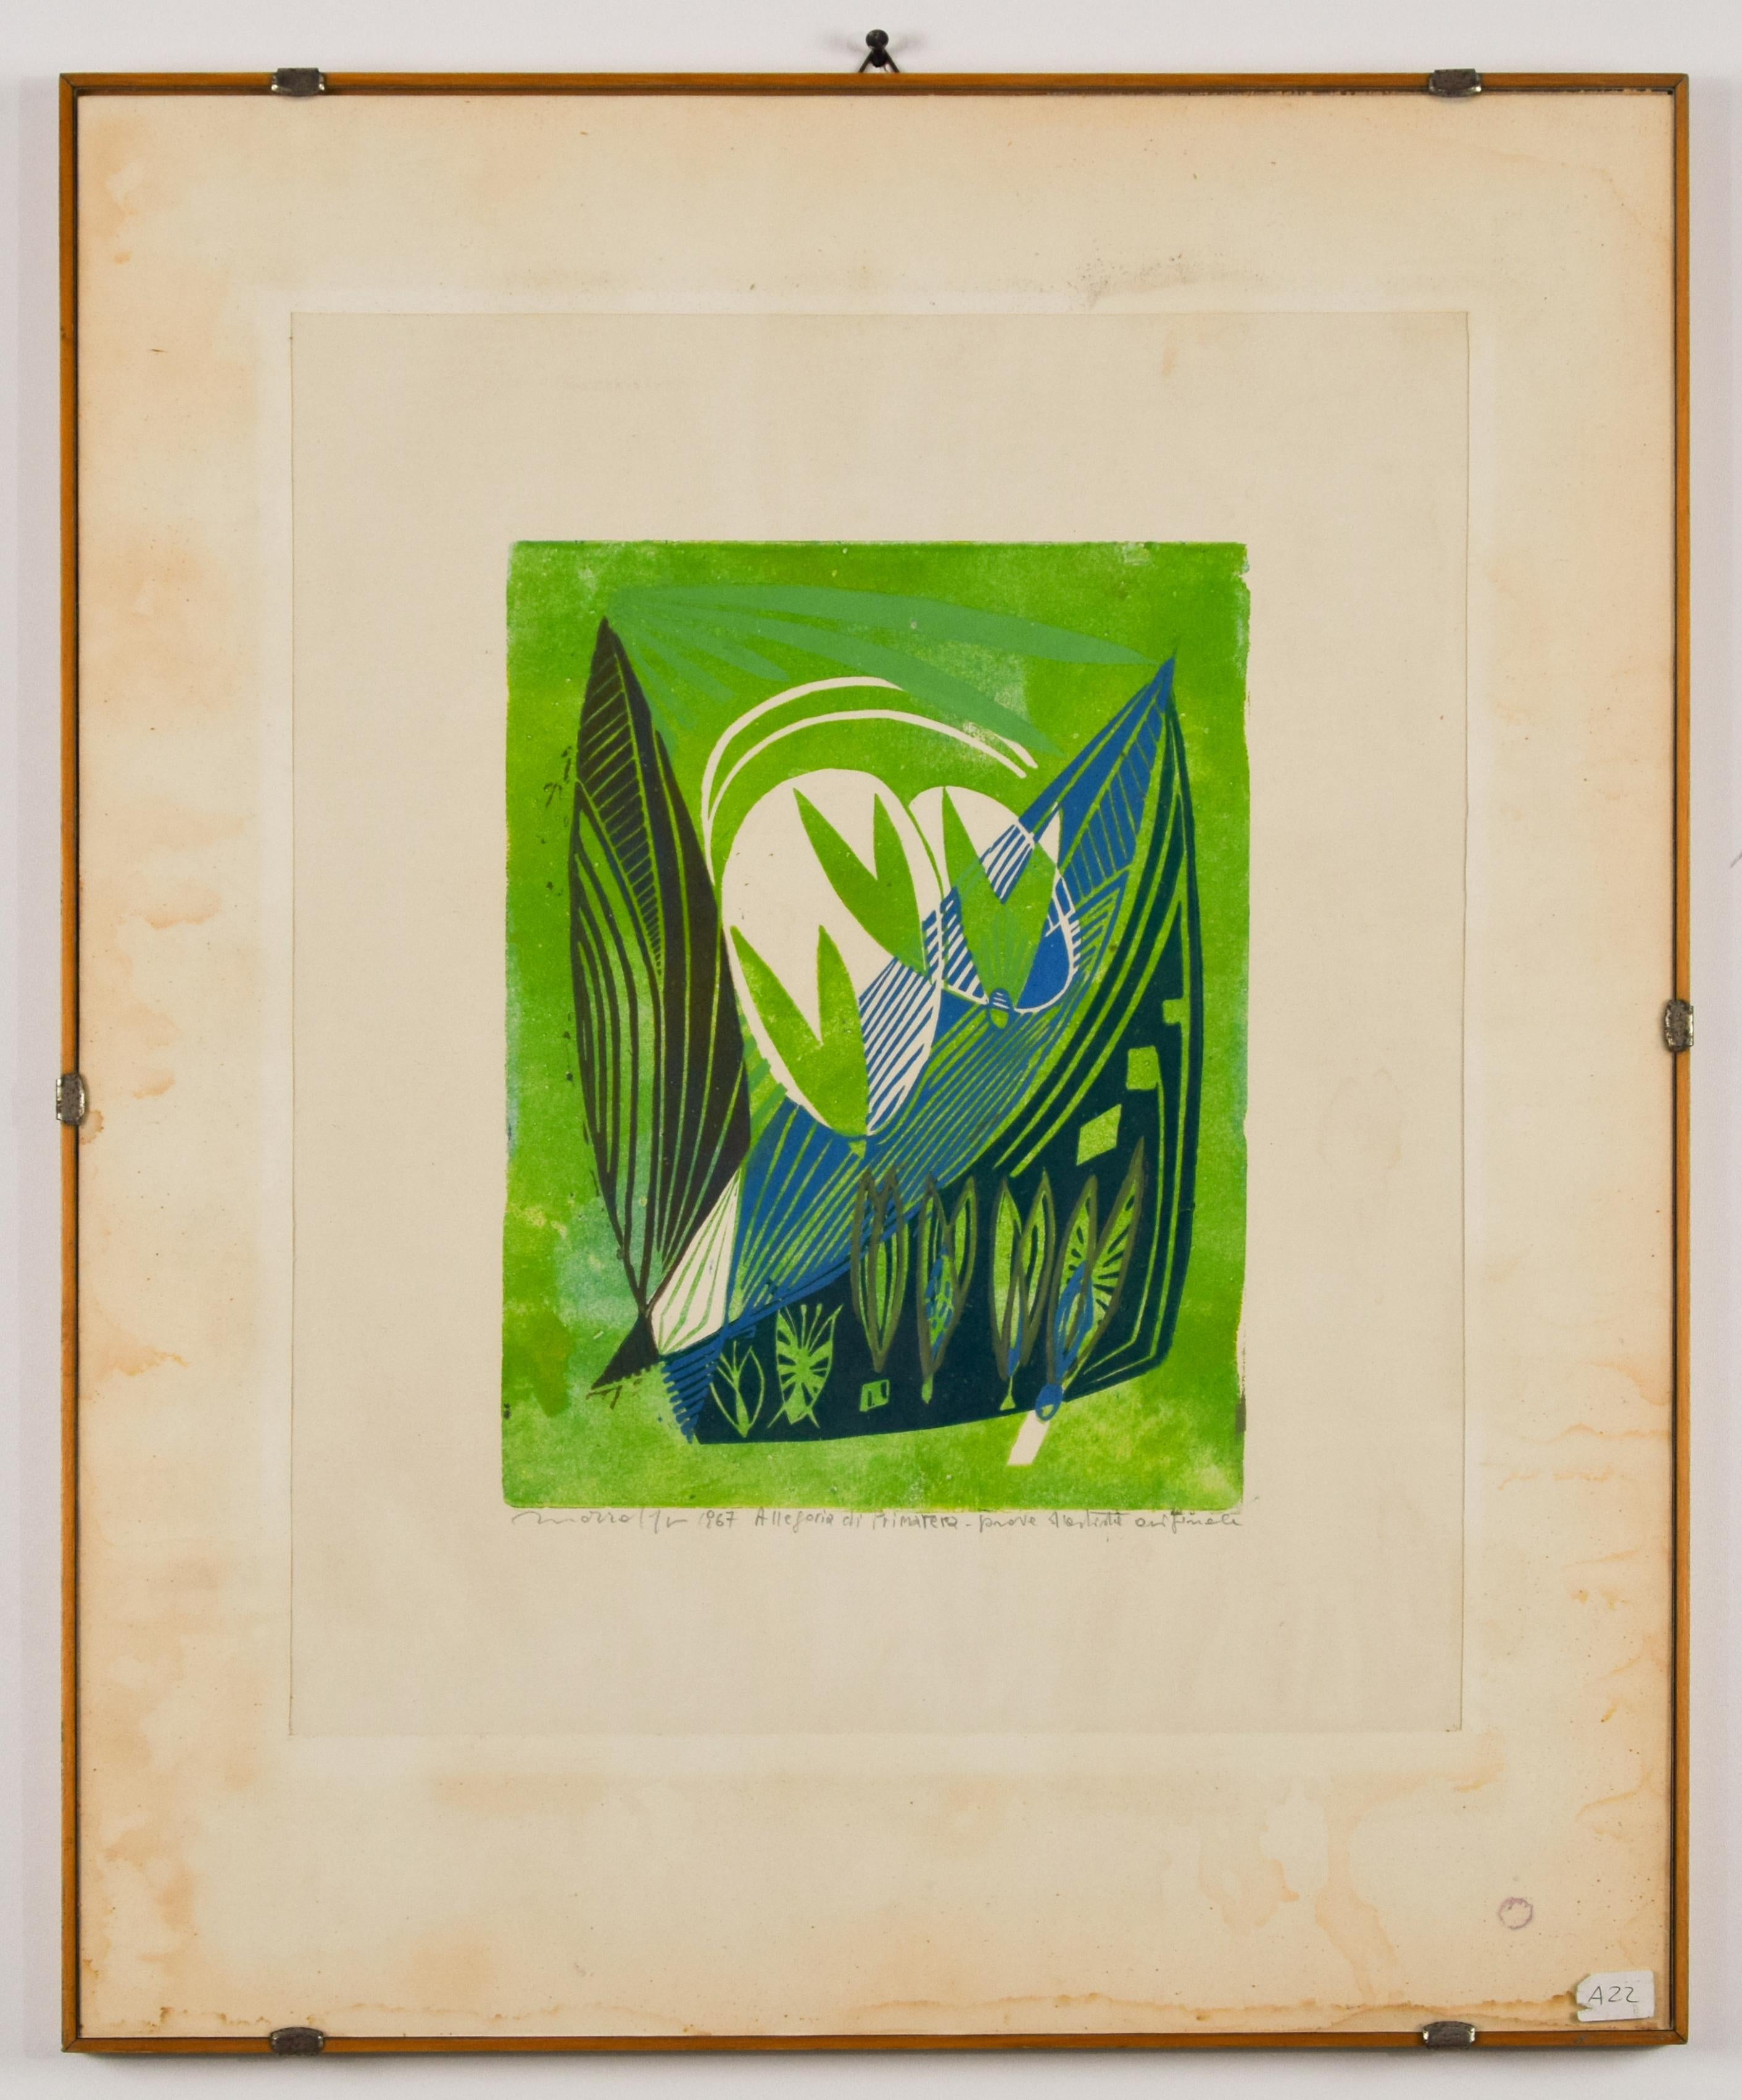 Rosario Morra Abstract Print - Spring Allegory - Original Woodcut by R. Morra - 1967